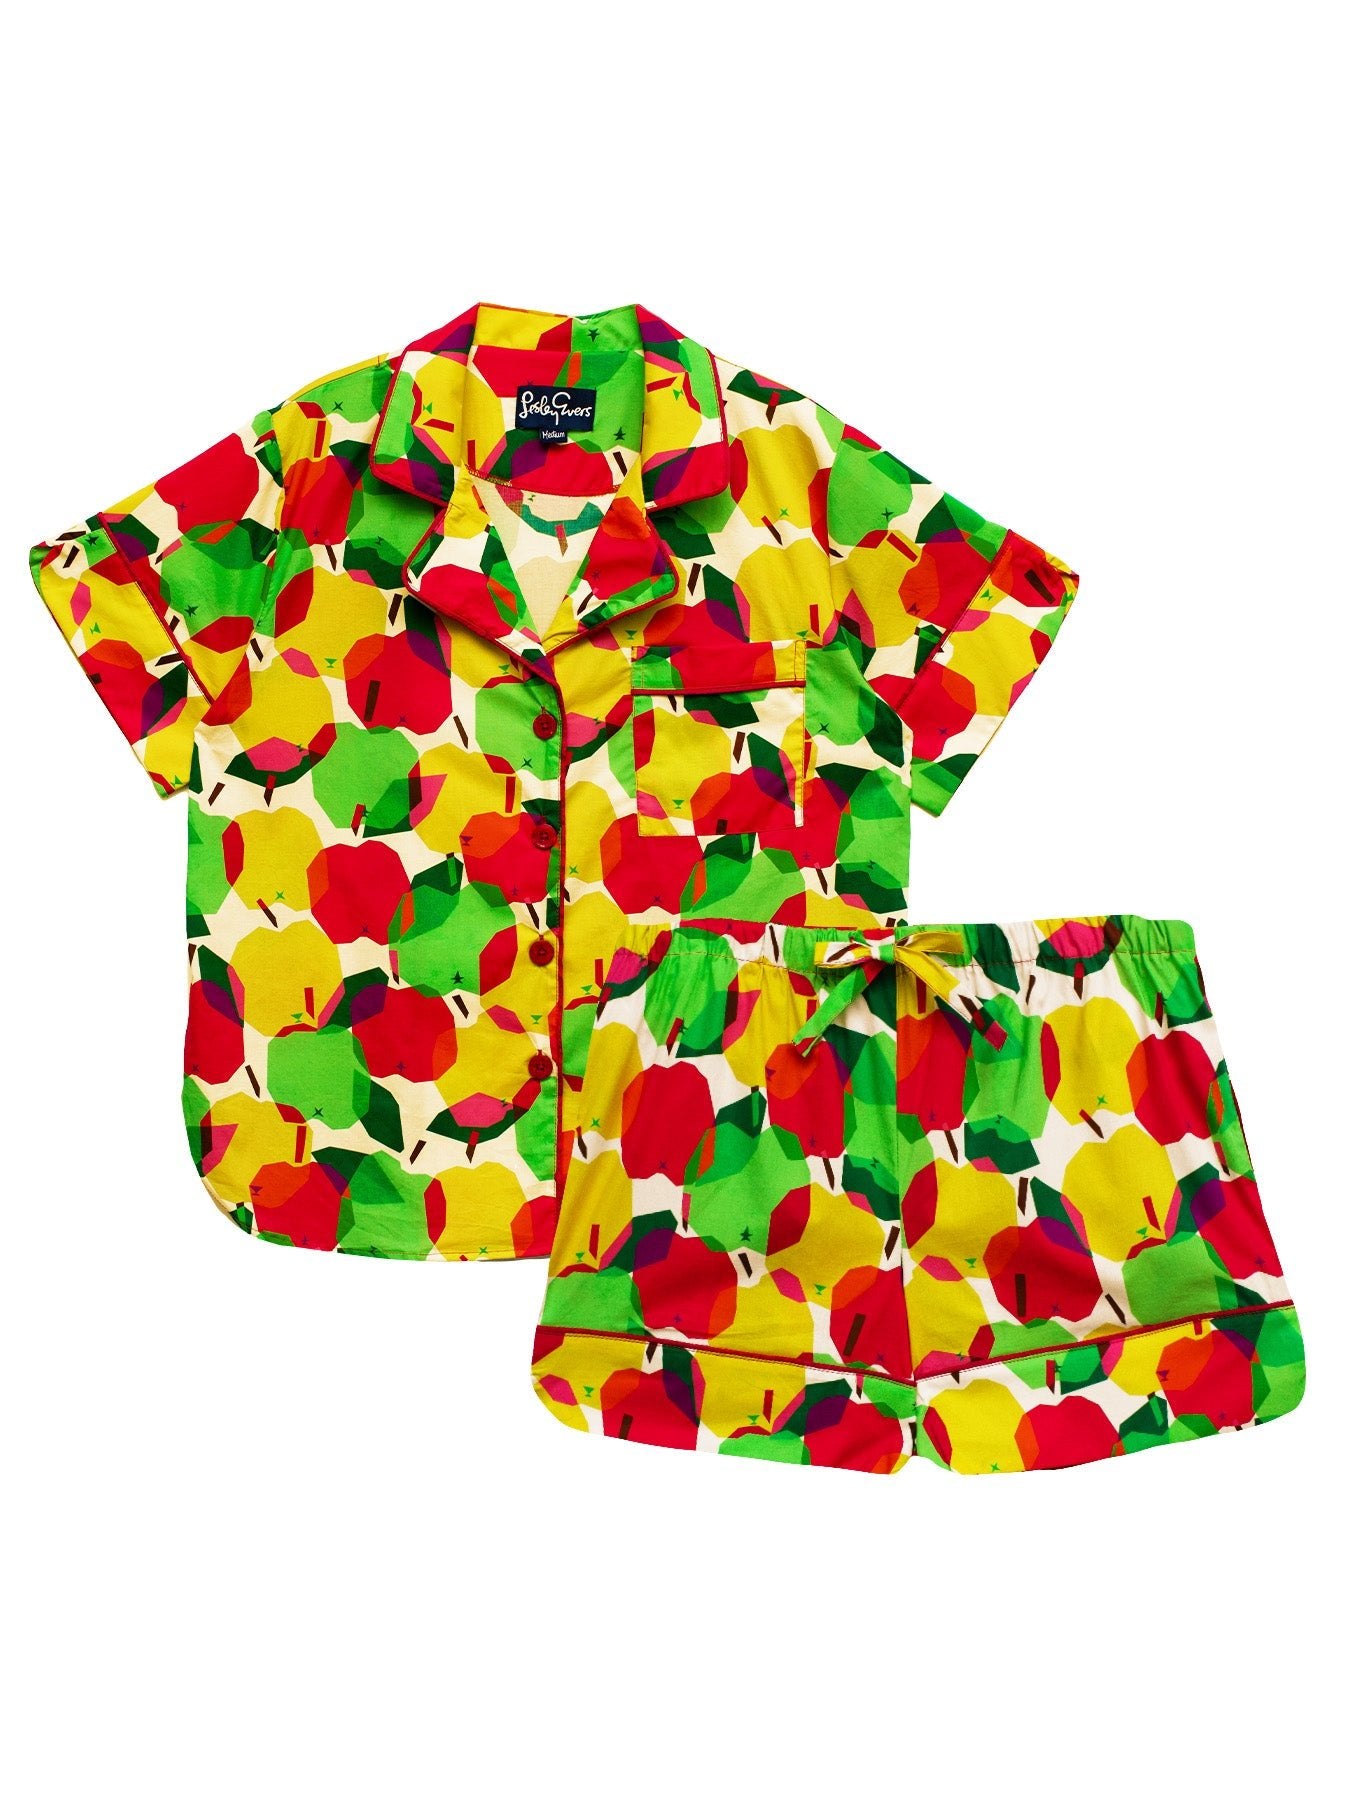 ZOEY pajama set Apples - Lesley Evers - cotton PJs - lounge - pajama set